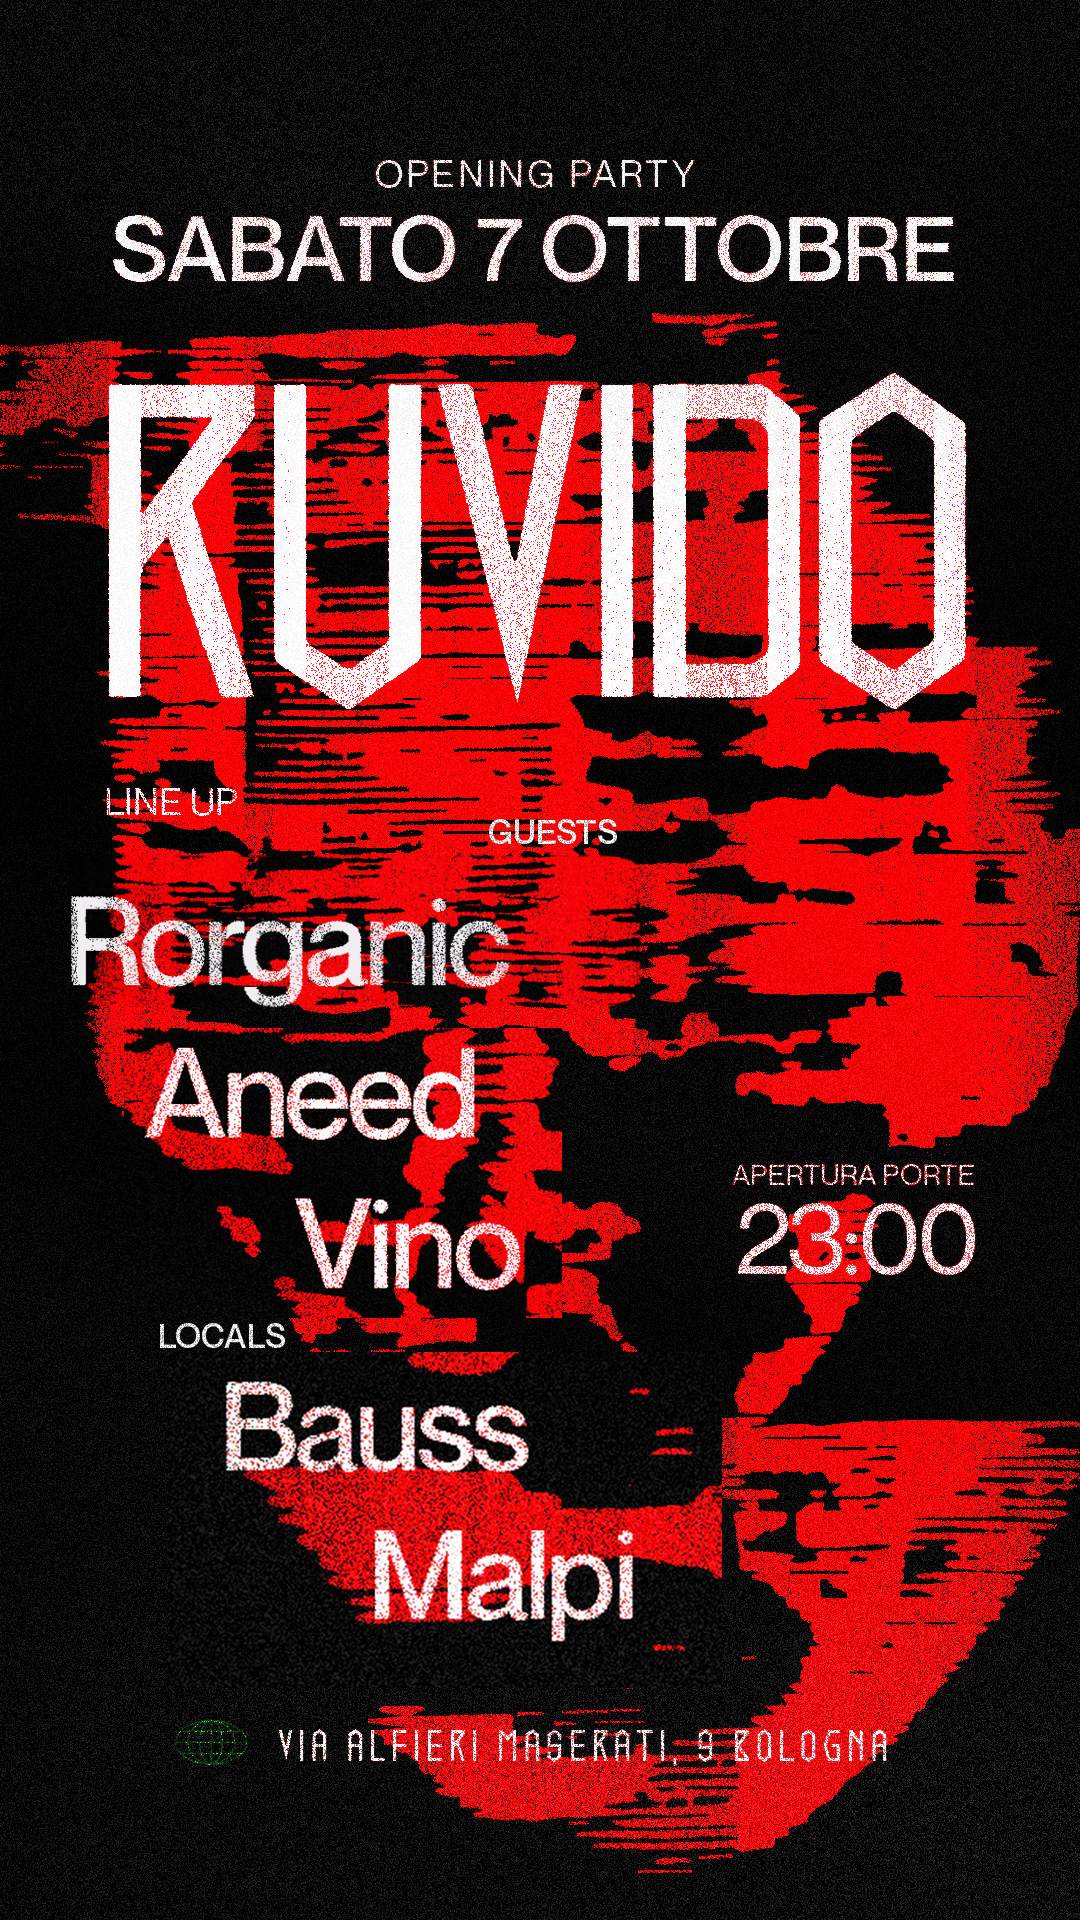 RUVIDO invites: Rorganic, Aneed & Vino - フライヤー表